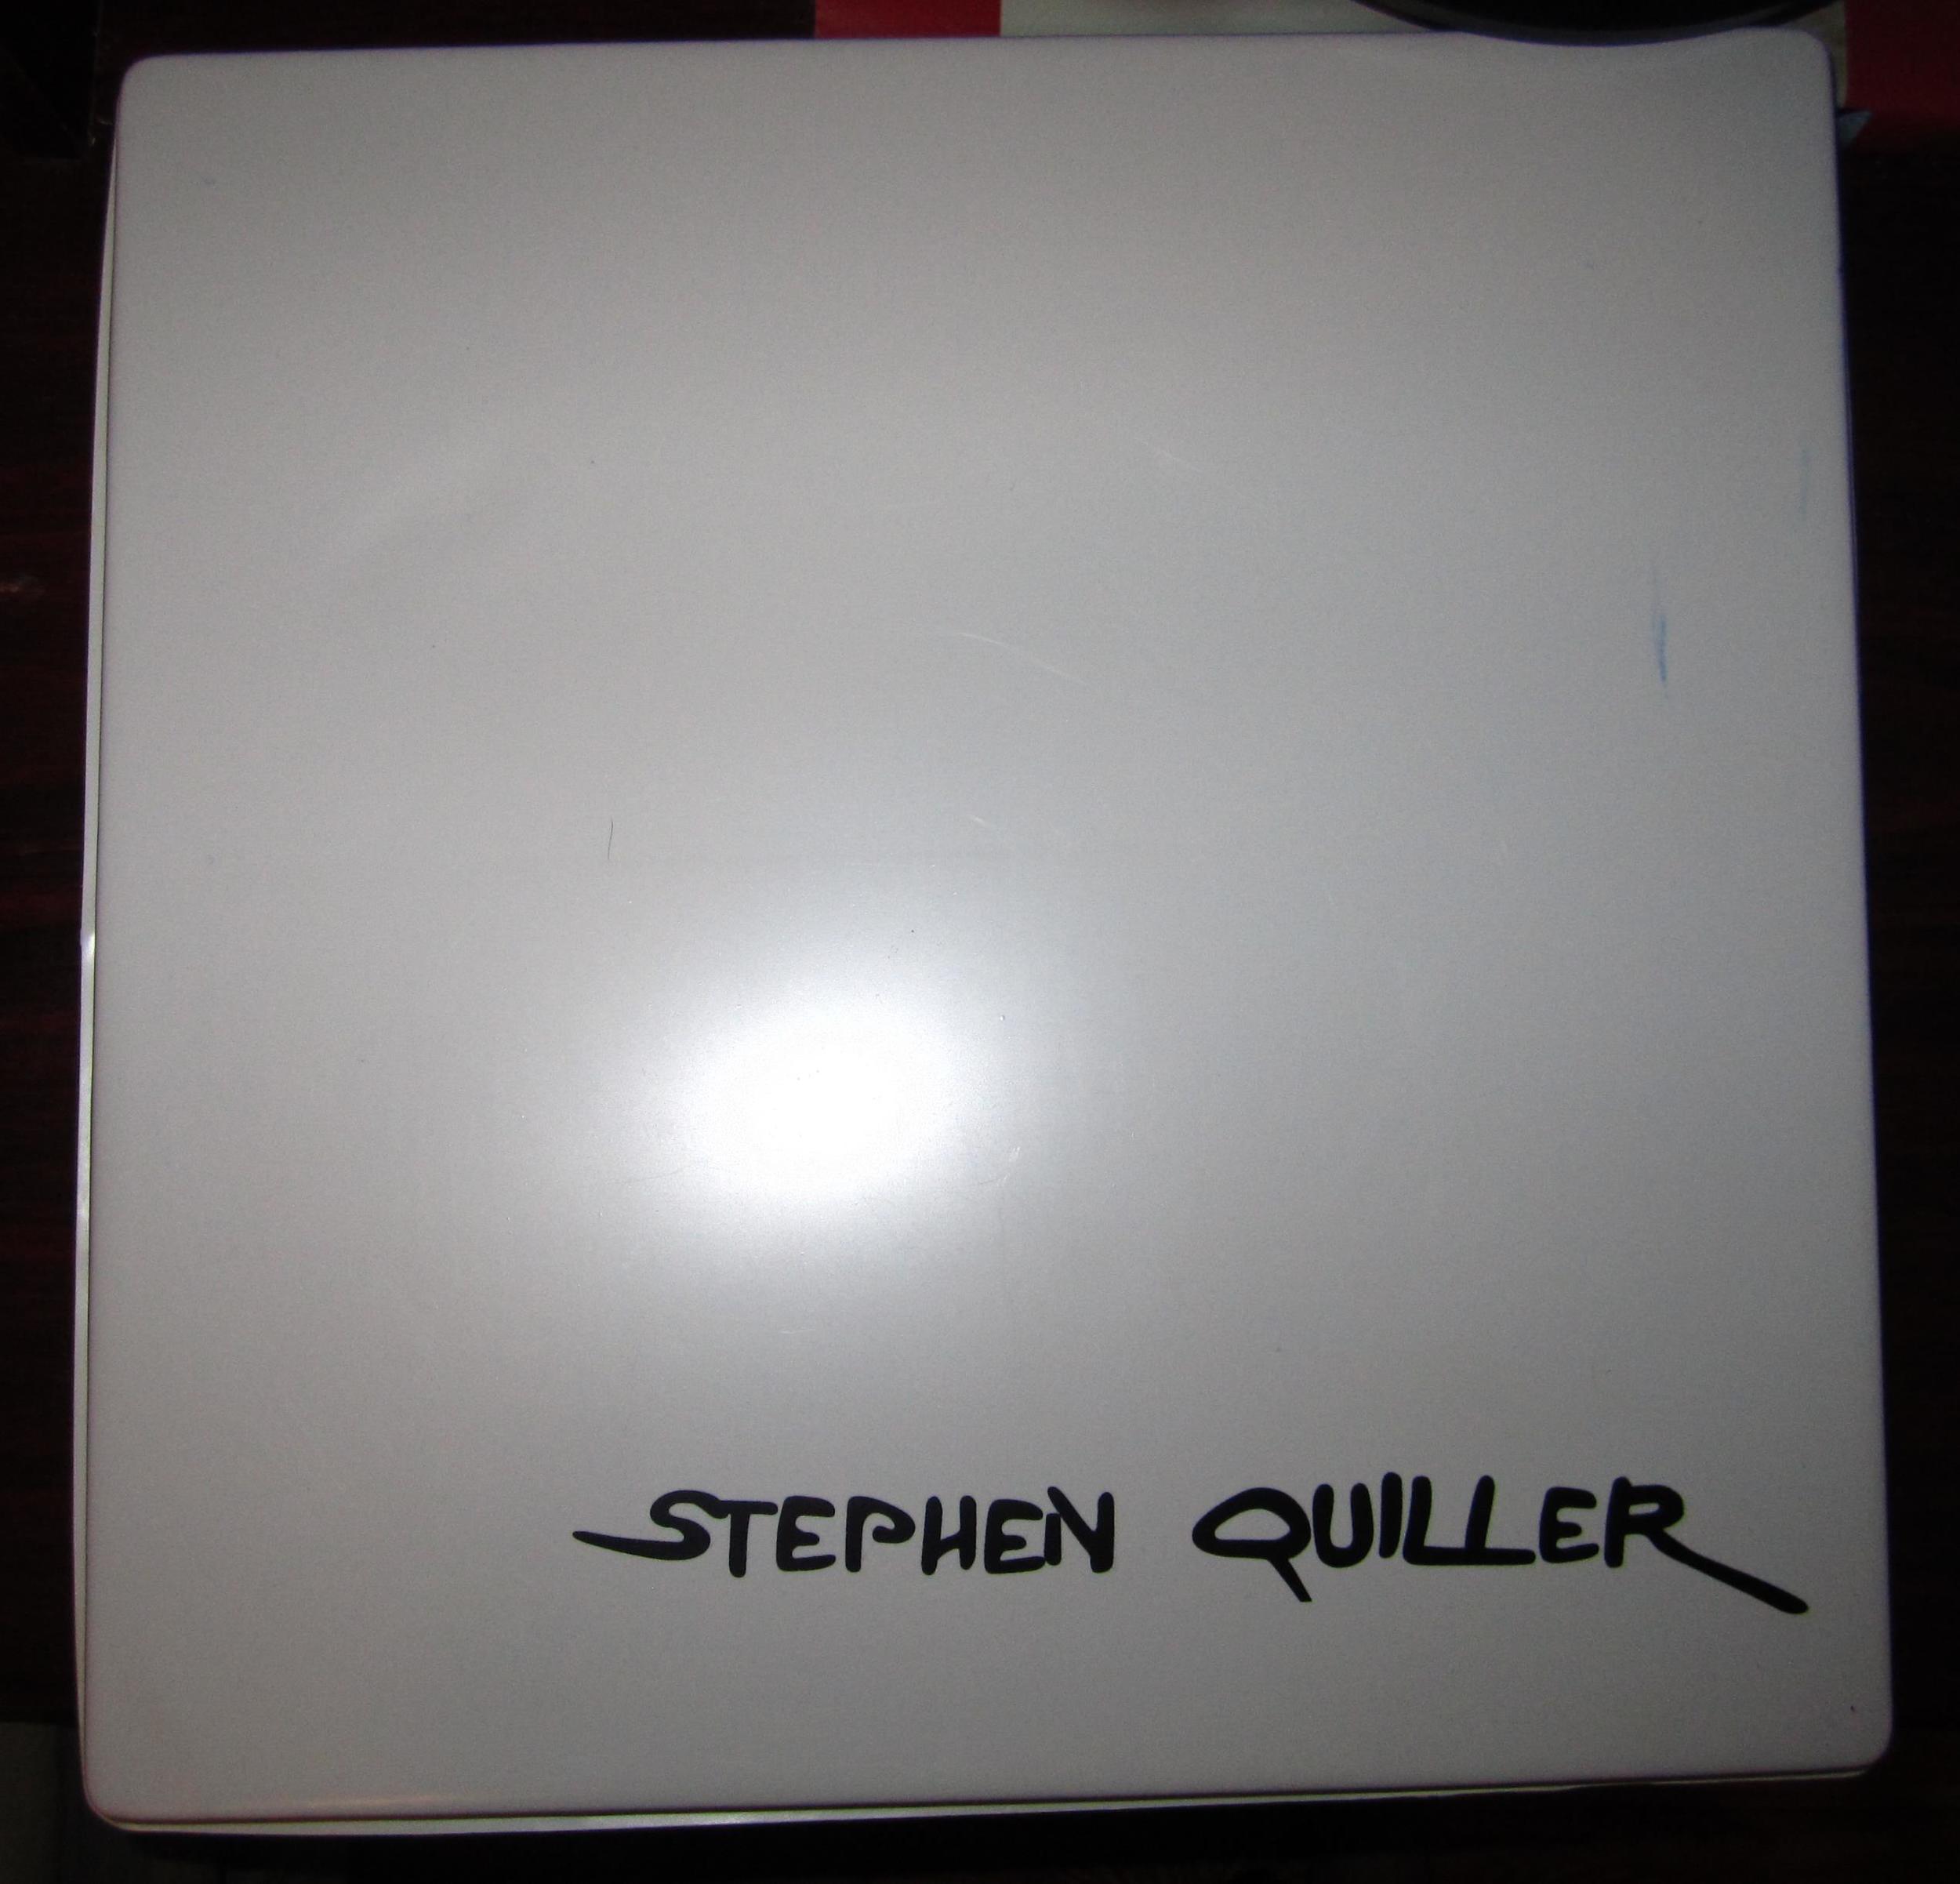 The Stephen Quiller Palette